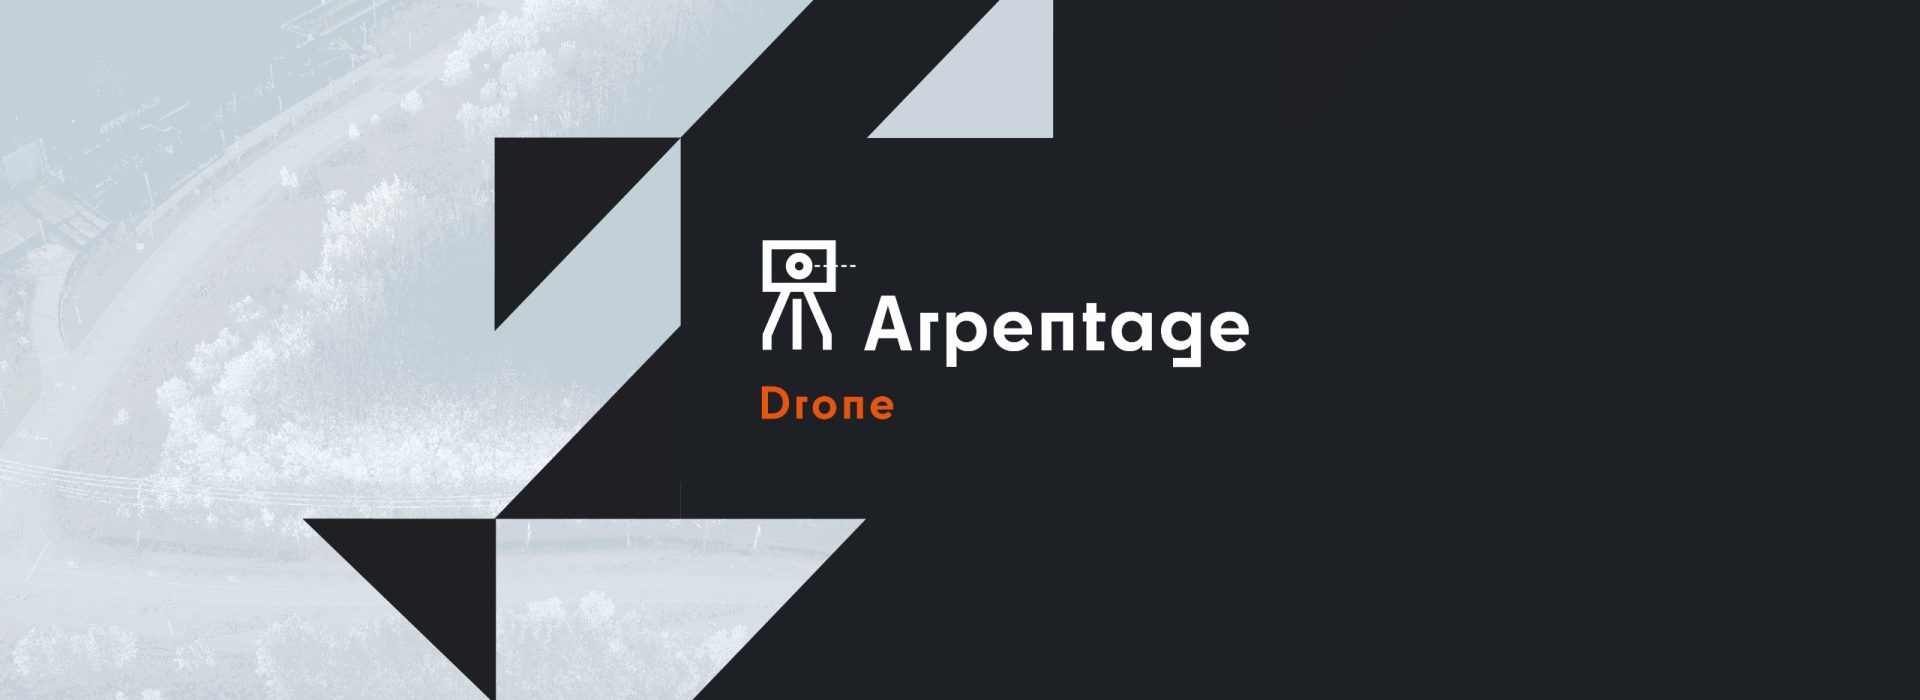 Arpentage - Drone